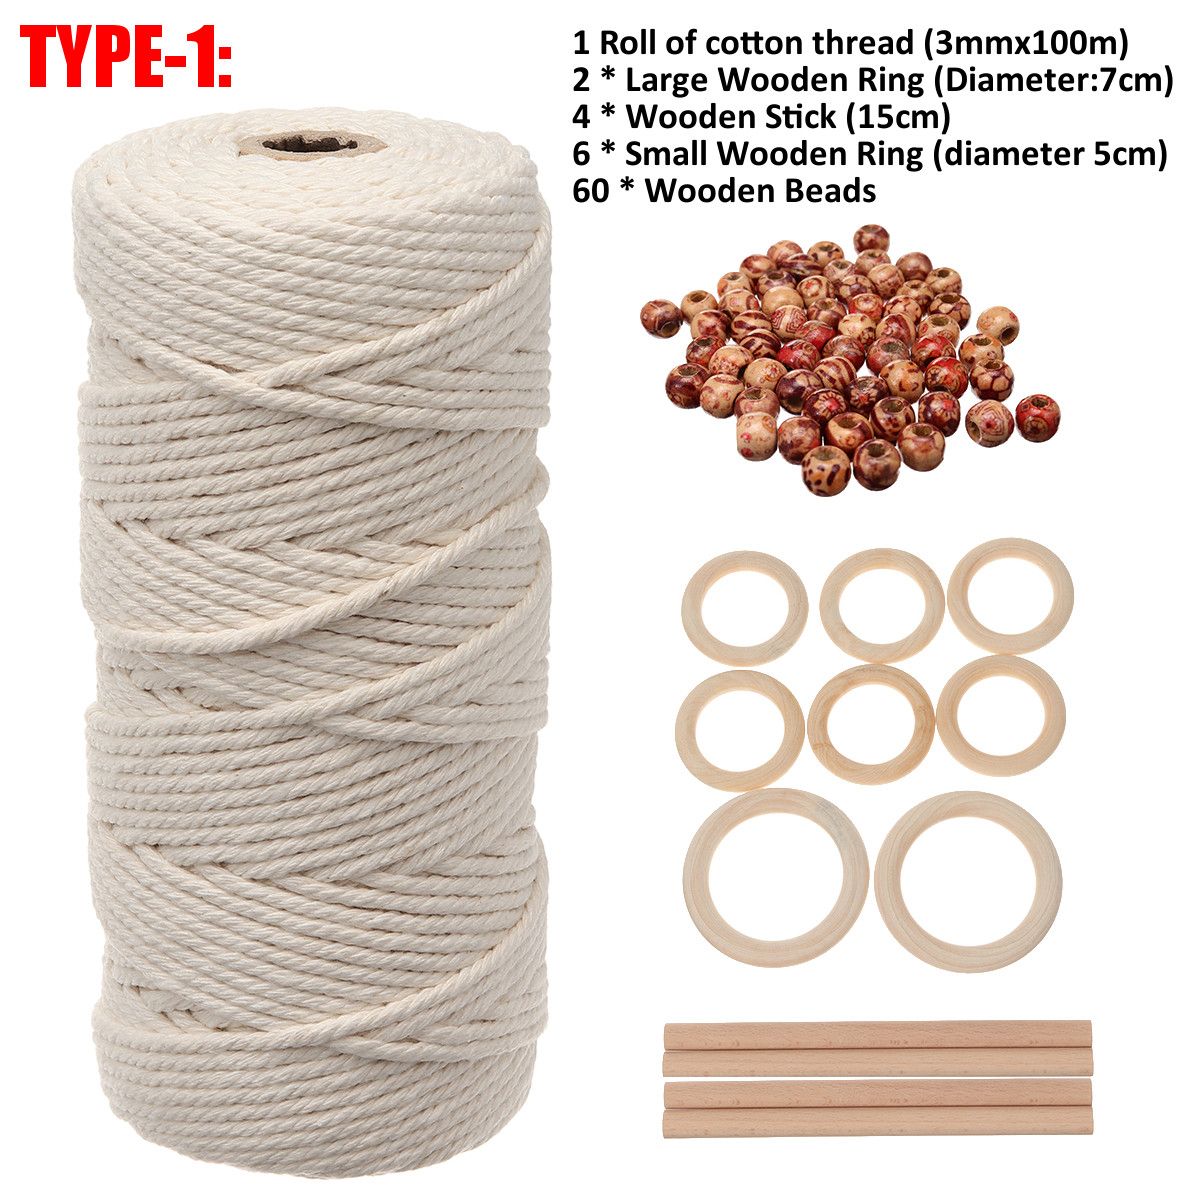 DIY-Craft-Cord-Yarn-Natural-Cotton-Wooden-Bead-Kit-Tapestry-Macrame-Wall-Hanging-1735479